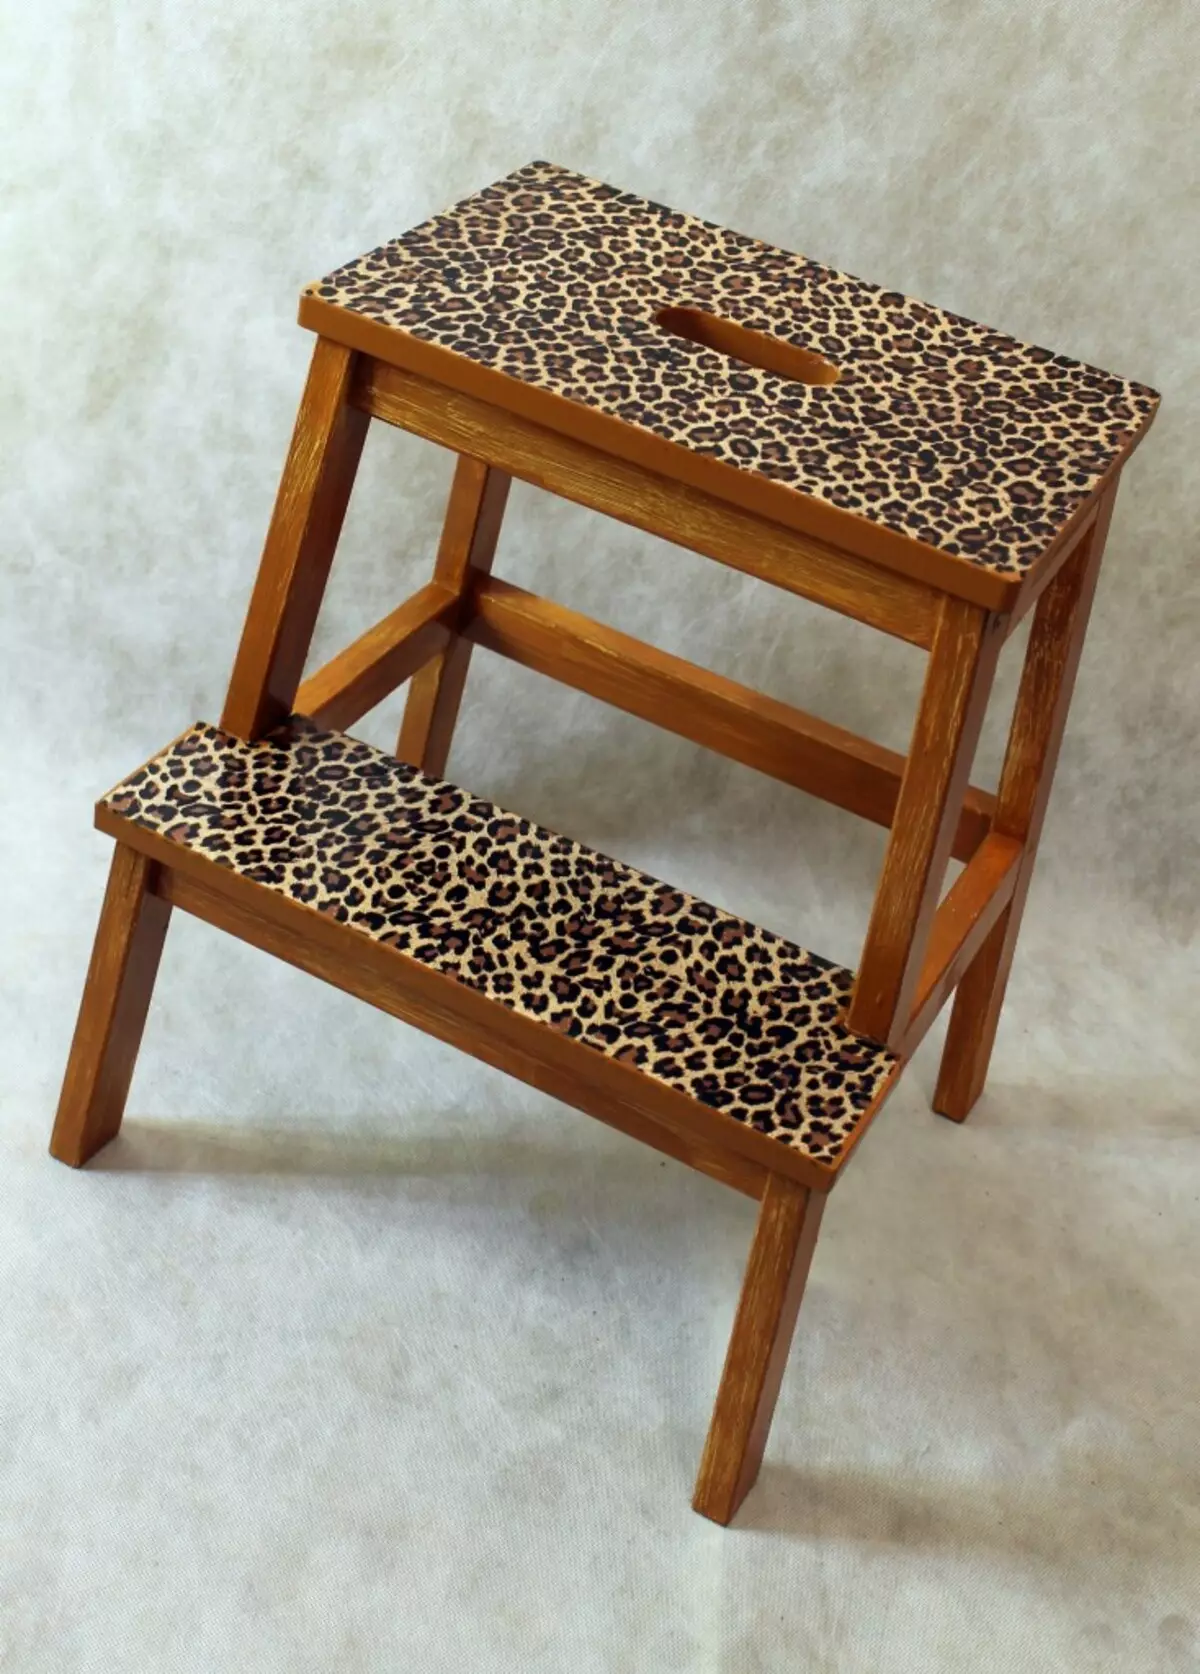 Decoupage stools